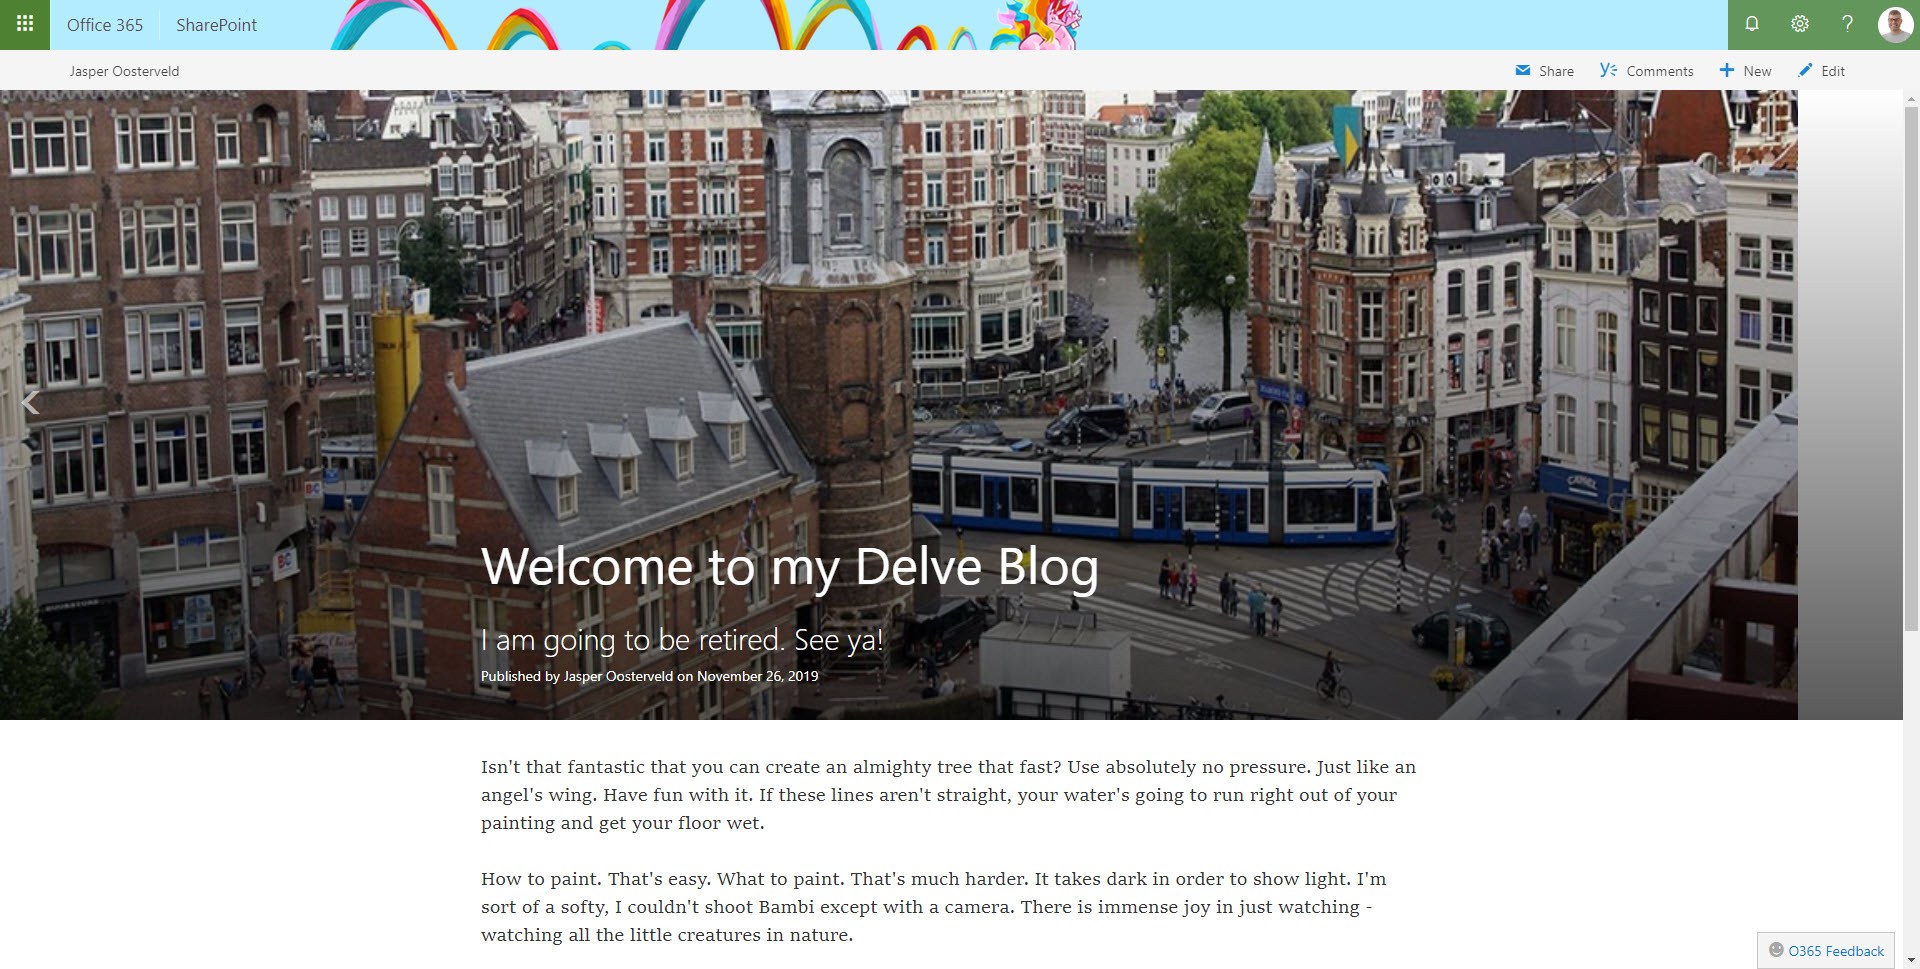 Delve blog interface.